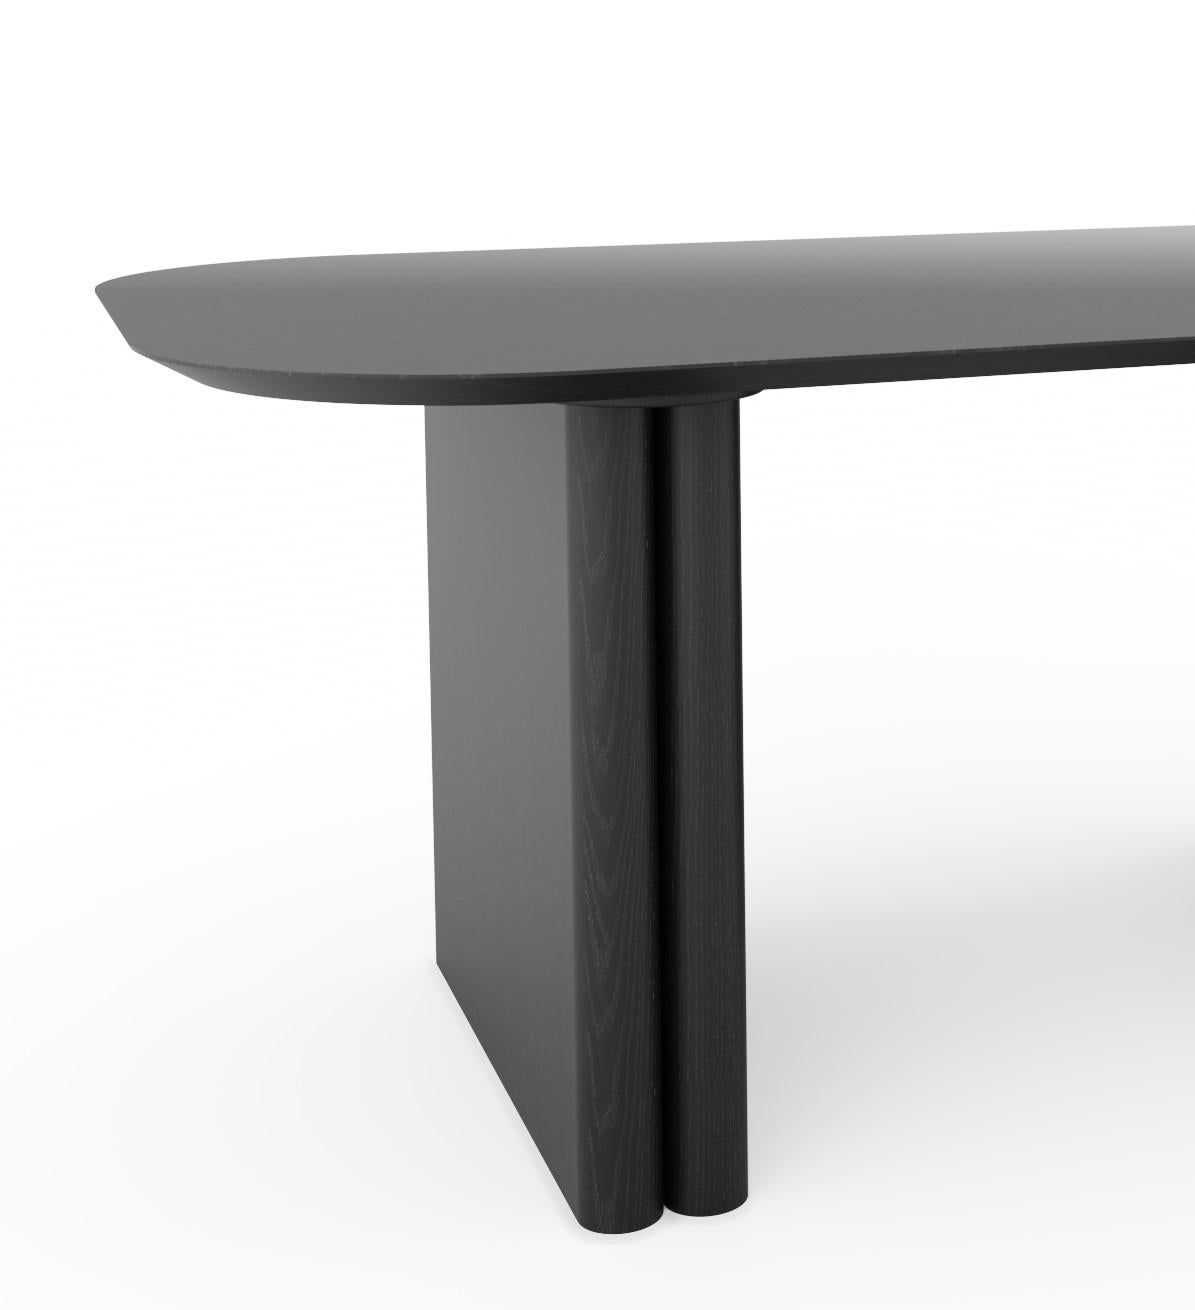 American Column Rectangular Table by Black Table Studio, Black, REP by Tuleste Factory 